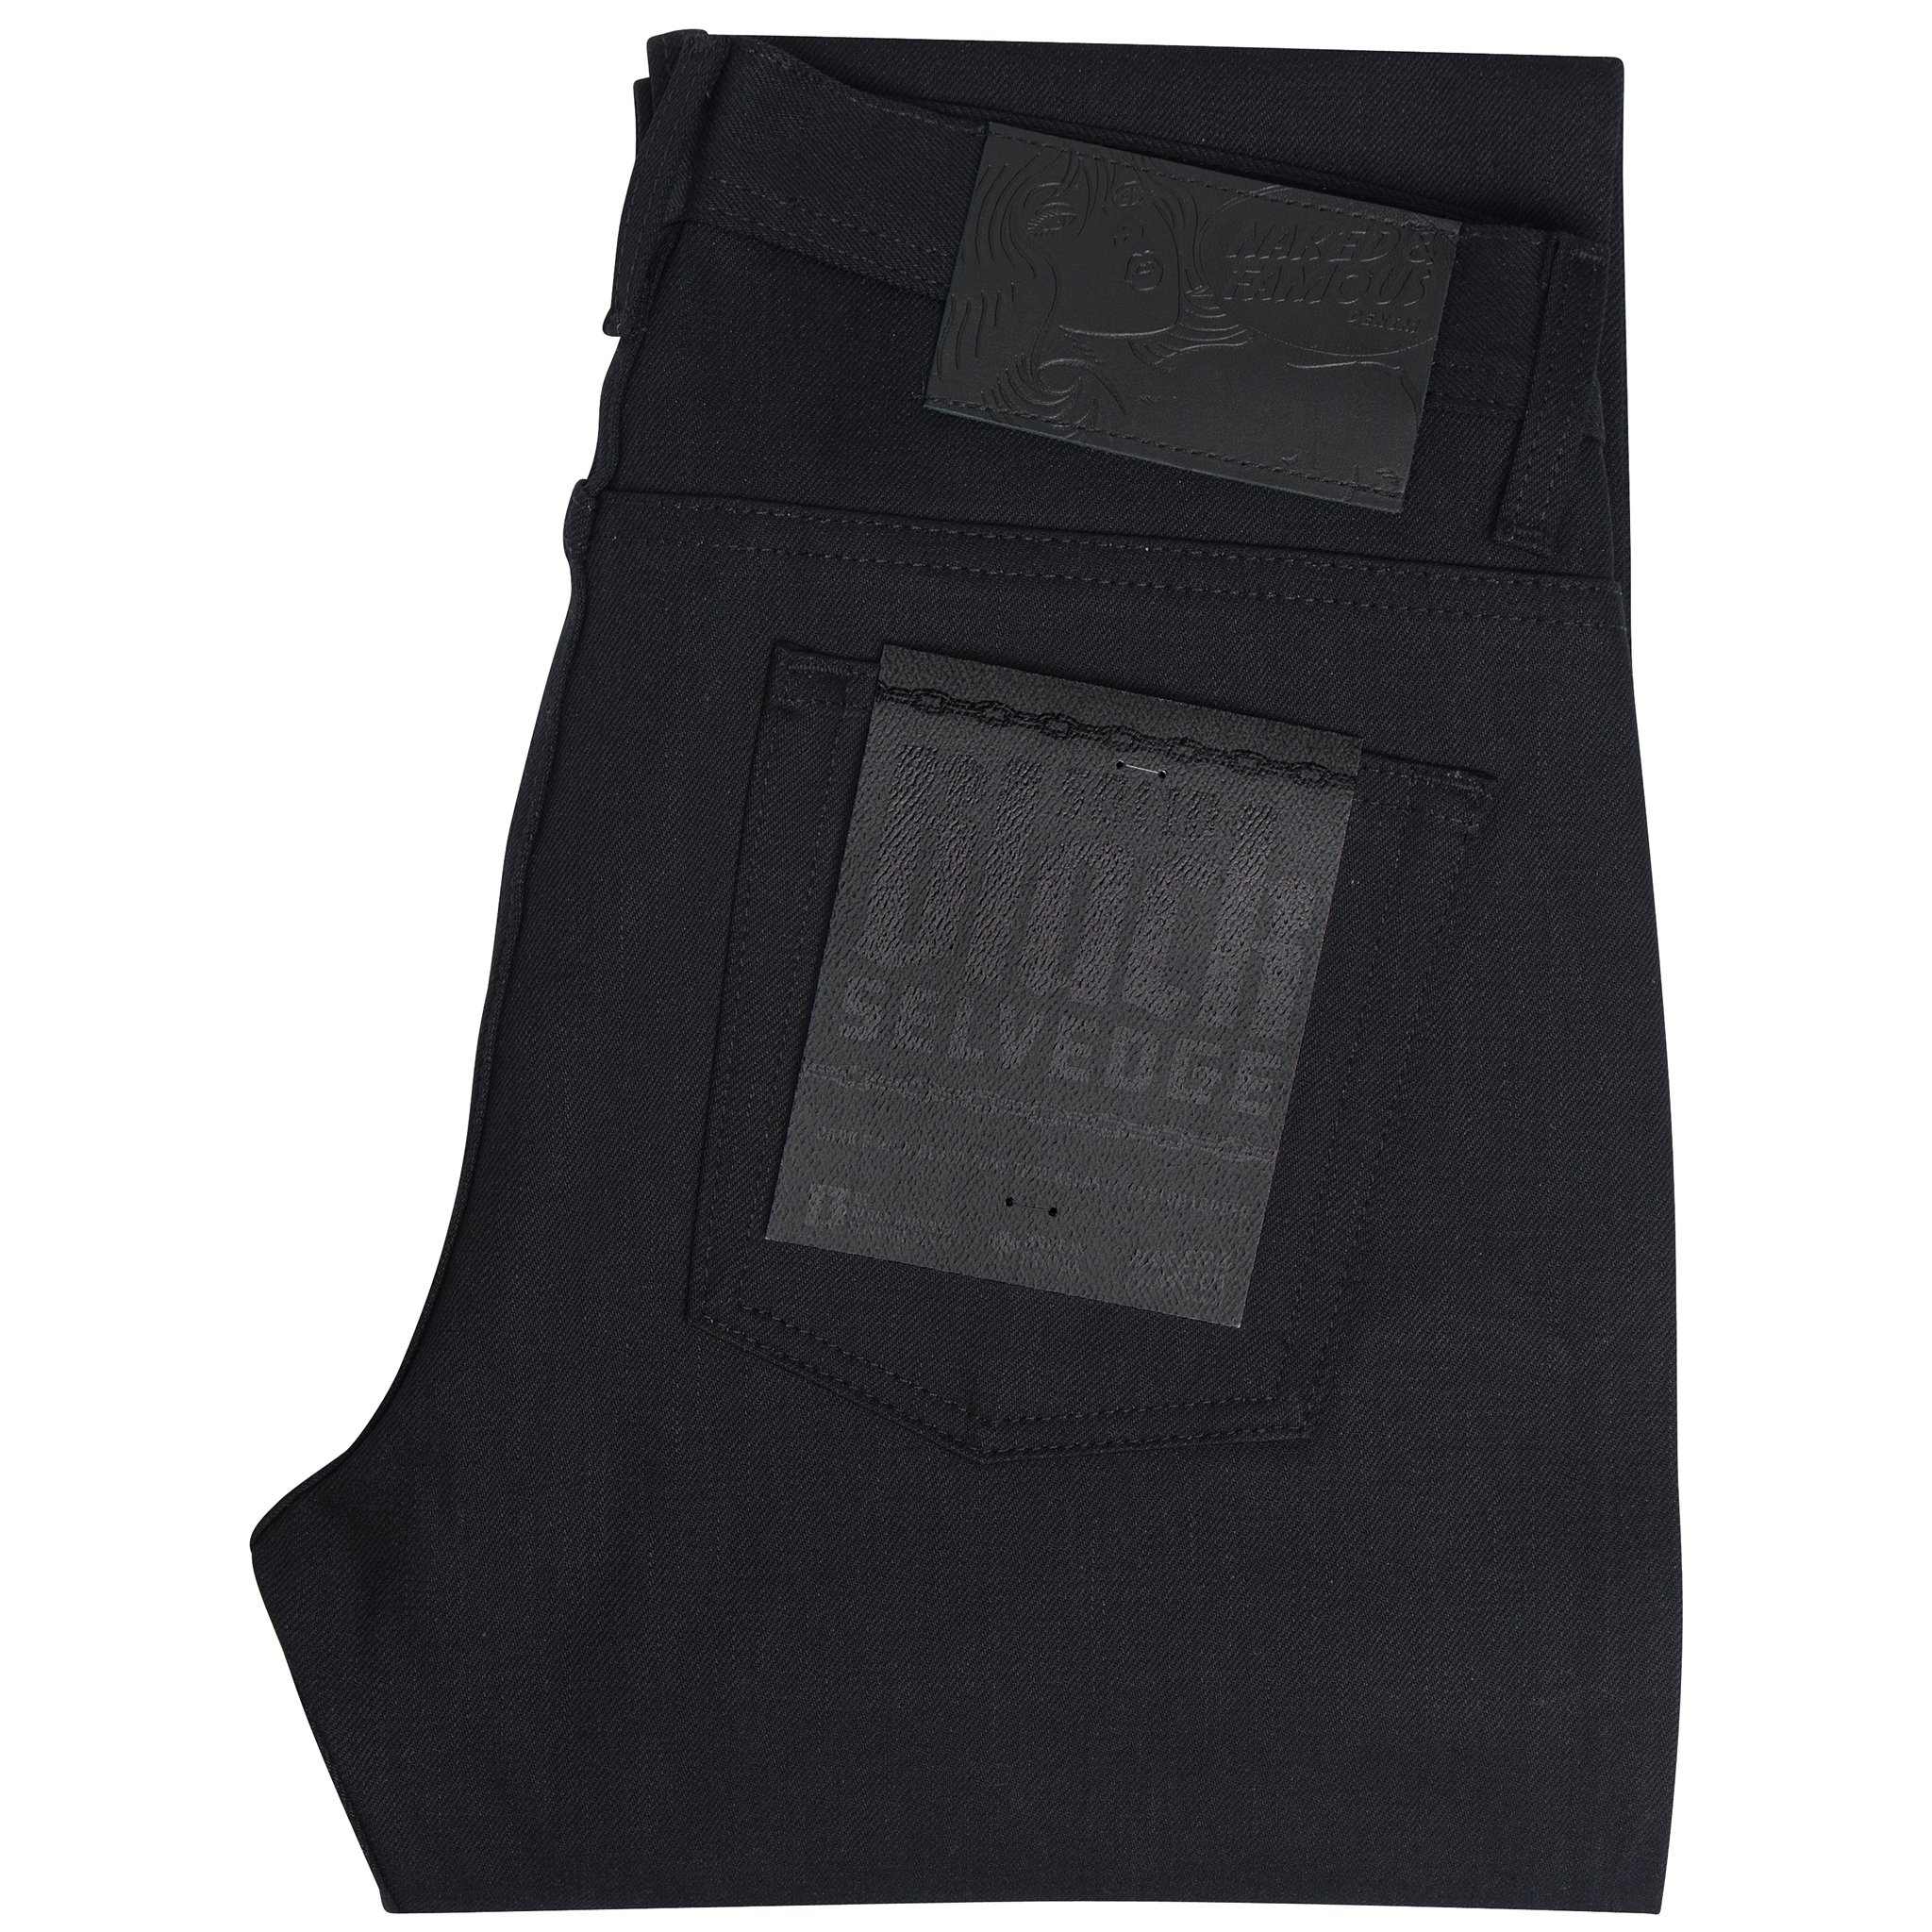  Solid Black Selvedge Jeans - Folded 